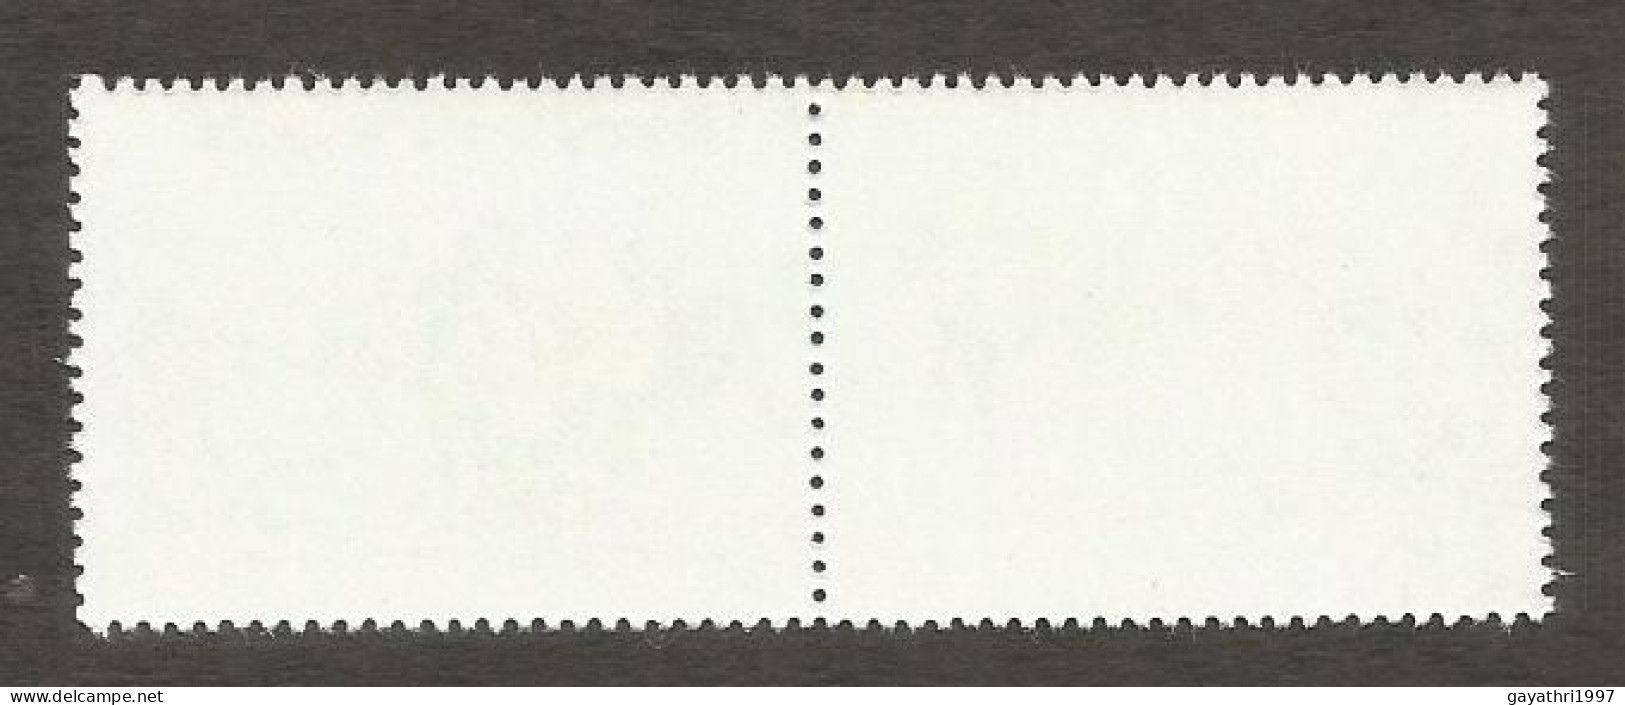 India 1991 Antarctic Treaty Se-tenant Mint MNH Good Condition (PST - 25) - Unused Stamps